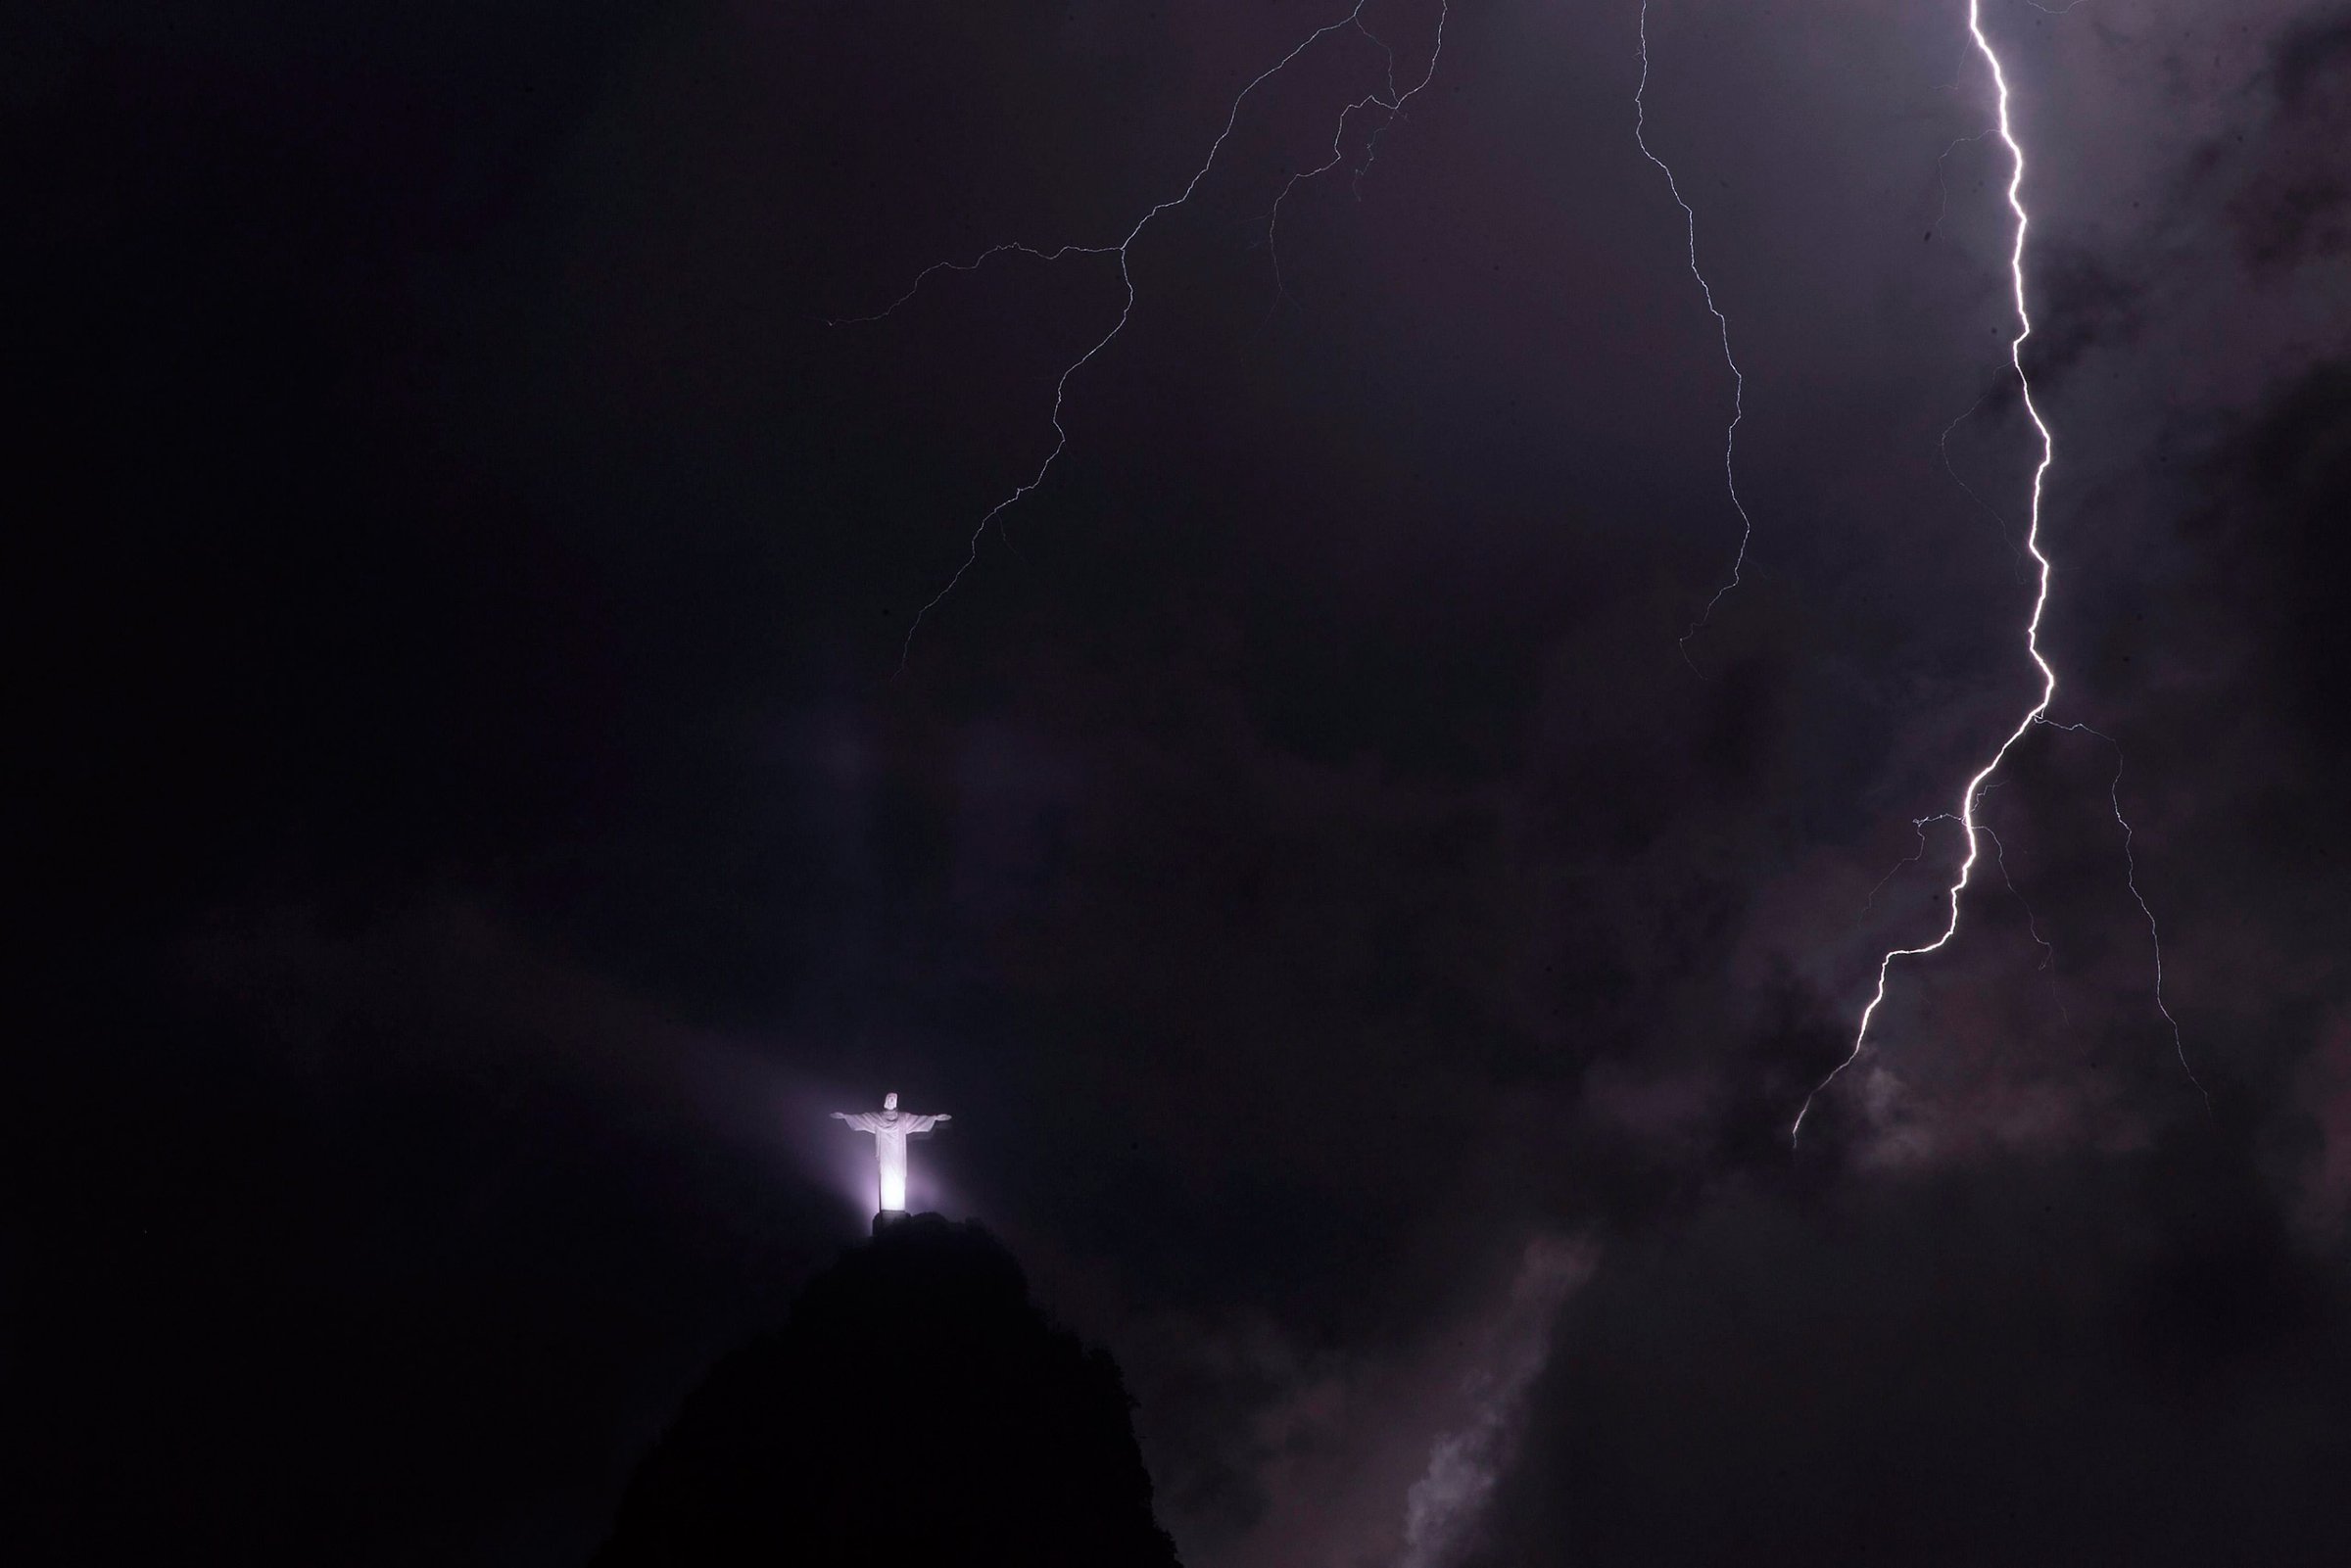 Lightning strikes near The Christ the Redeemer statue atop of Corcovado Mountain during a storm in Rio de Janeiro, Brazil, Feb. 23, 2016.